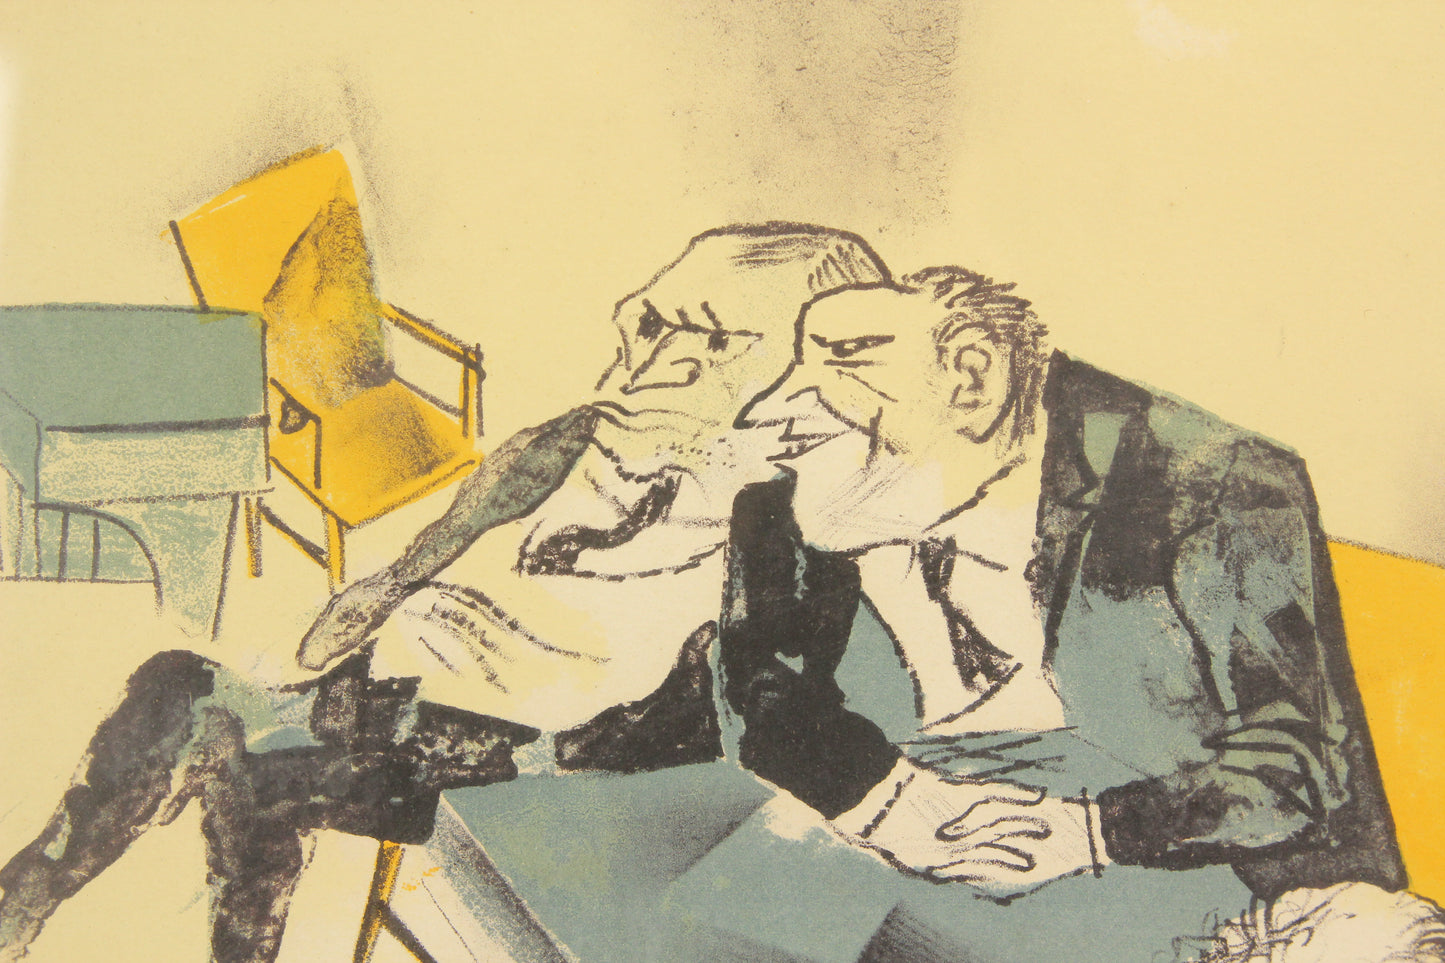 William Gropper Signed Political Cartoon Lithograph Print - 28.5 x 24"